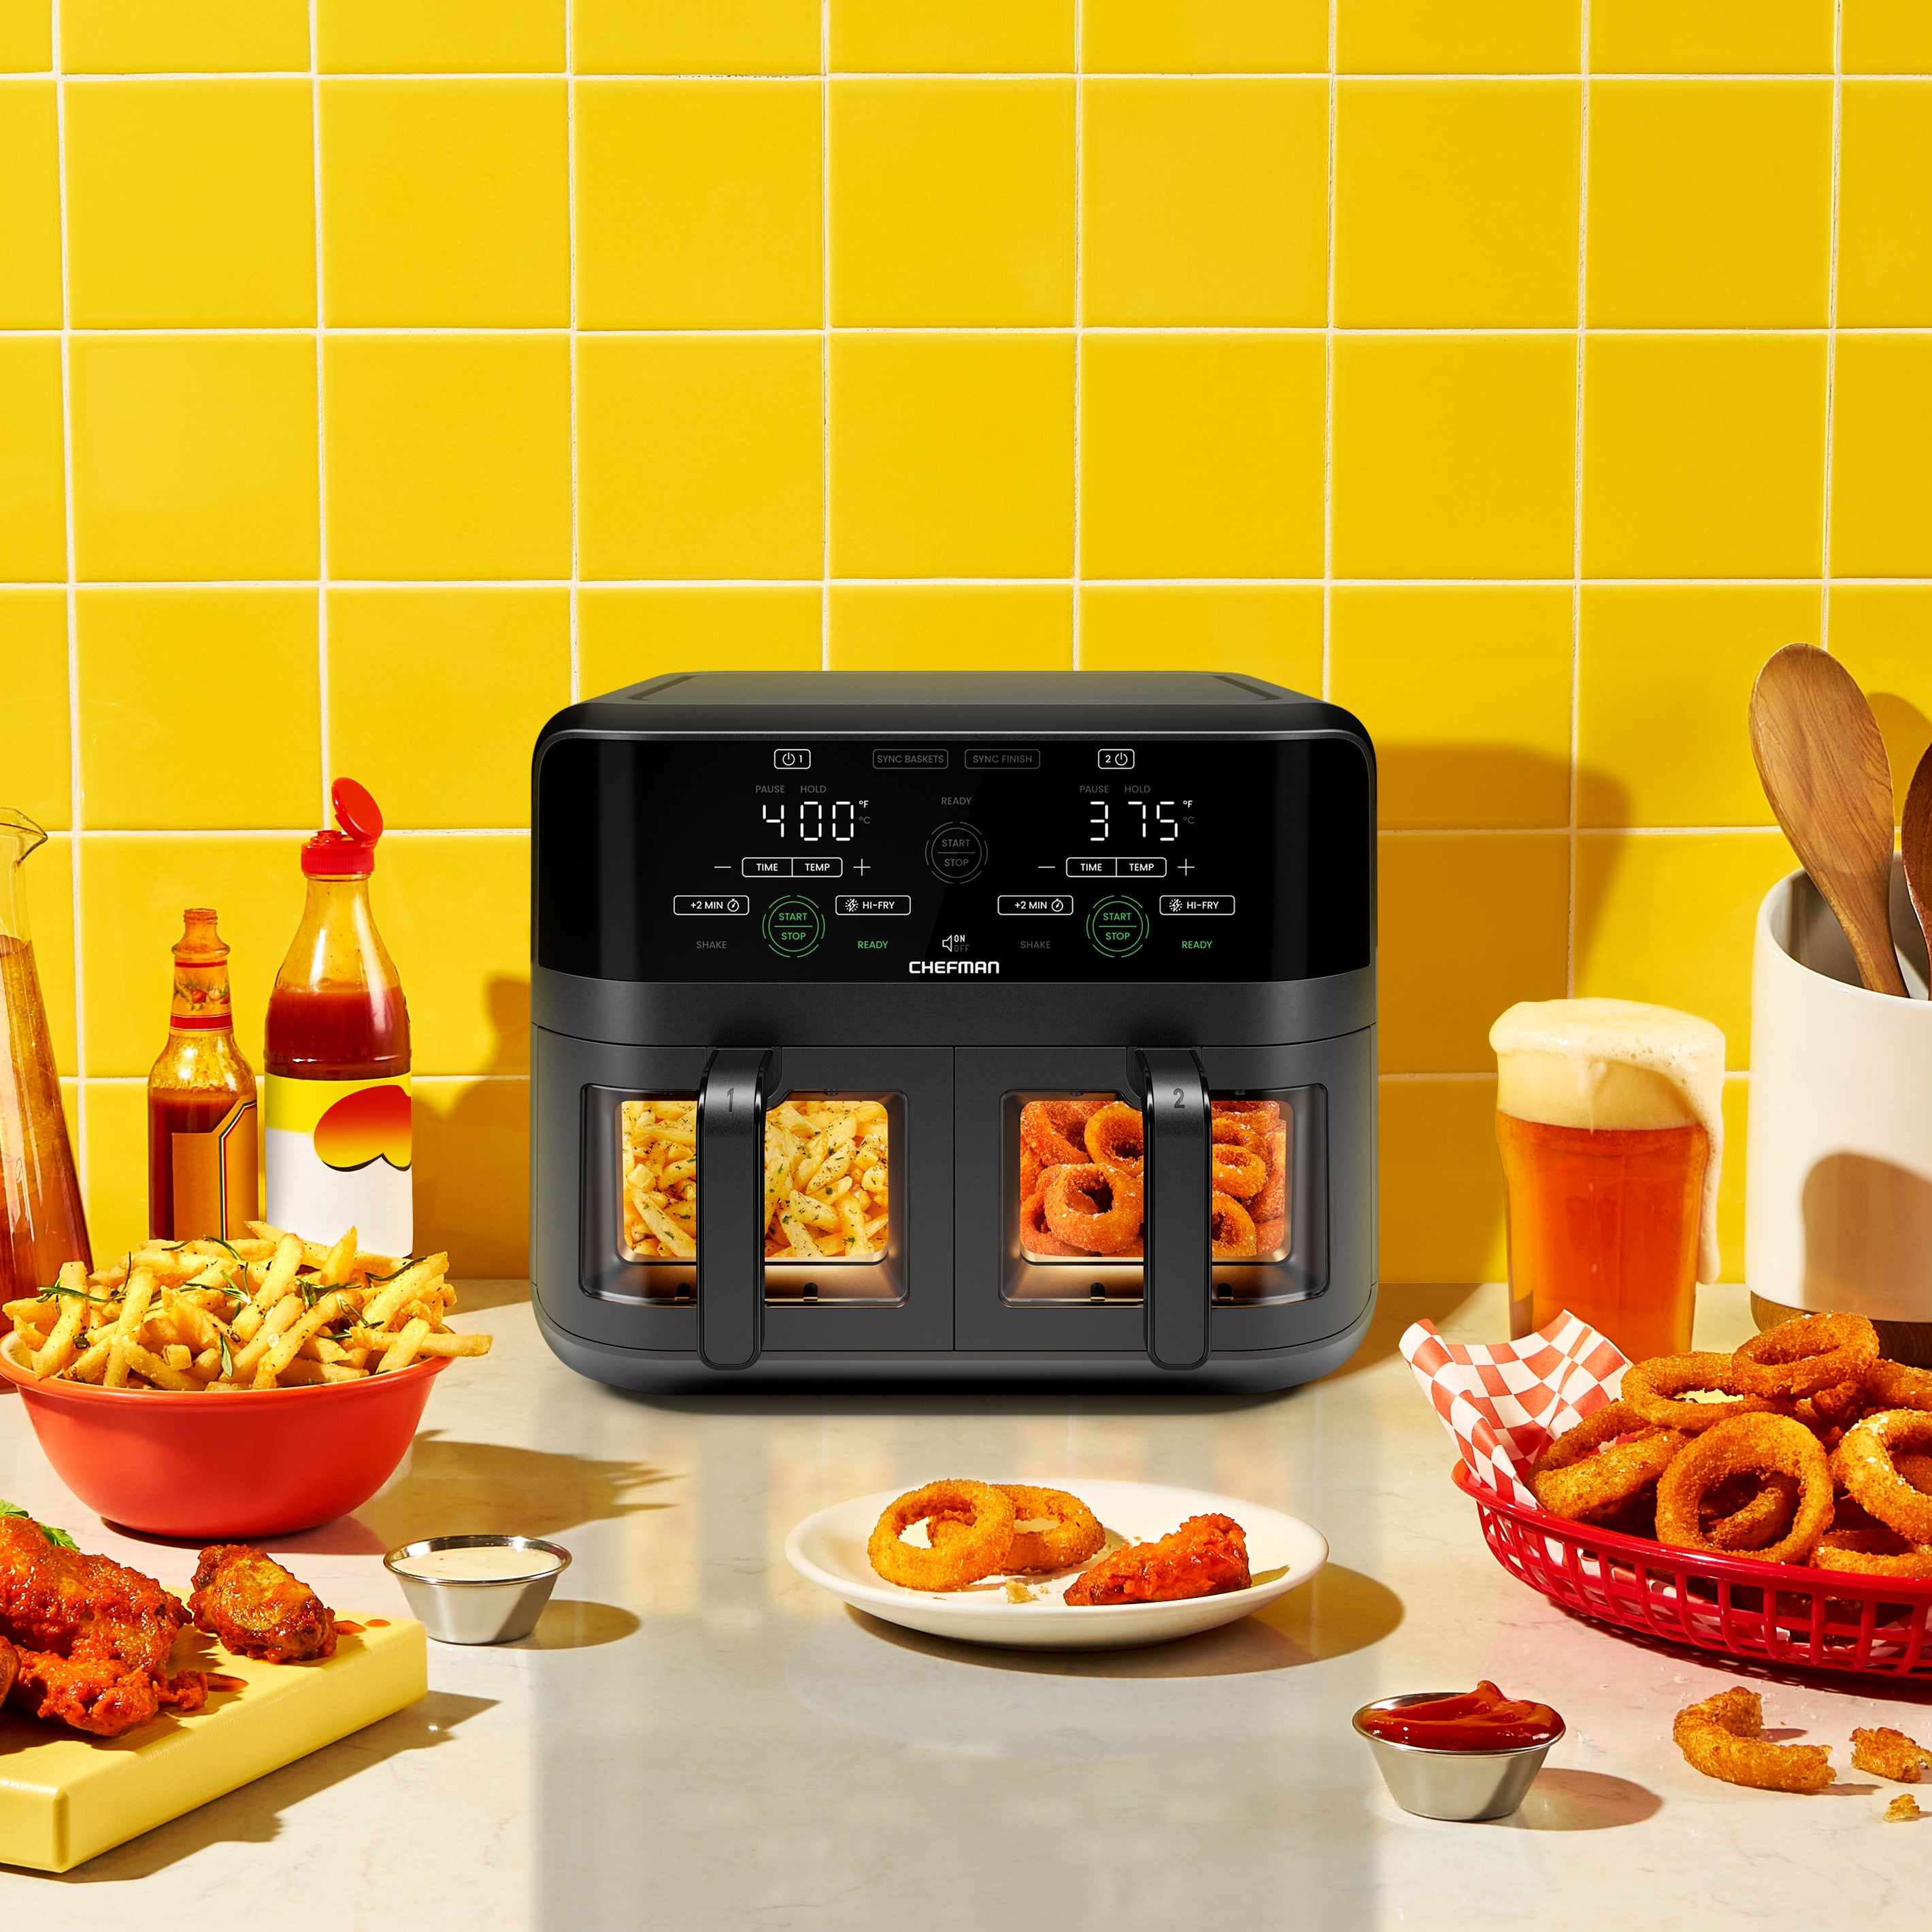 Ninja Air Fryer Max XL: Unleashing the Power of Healthy Cooking